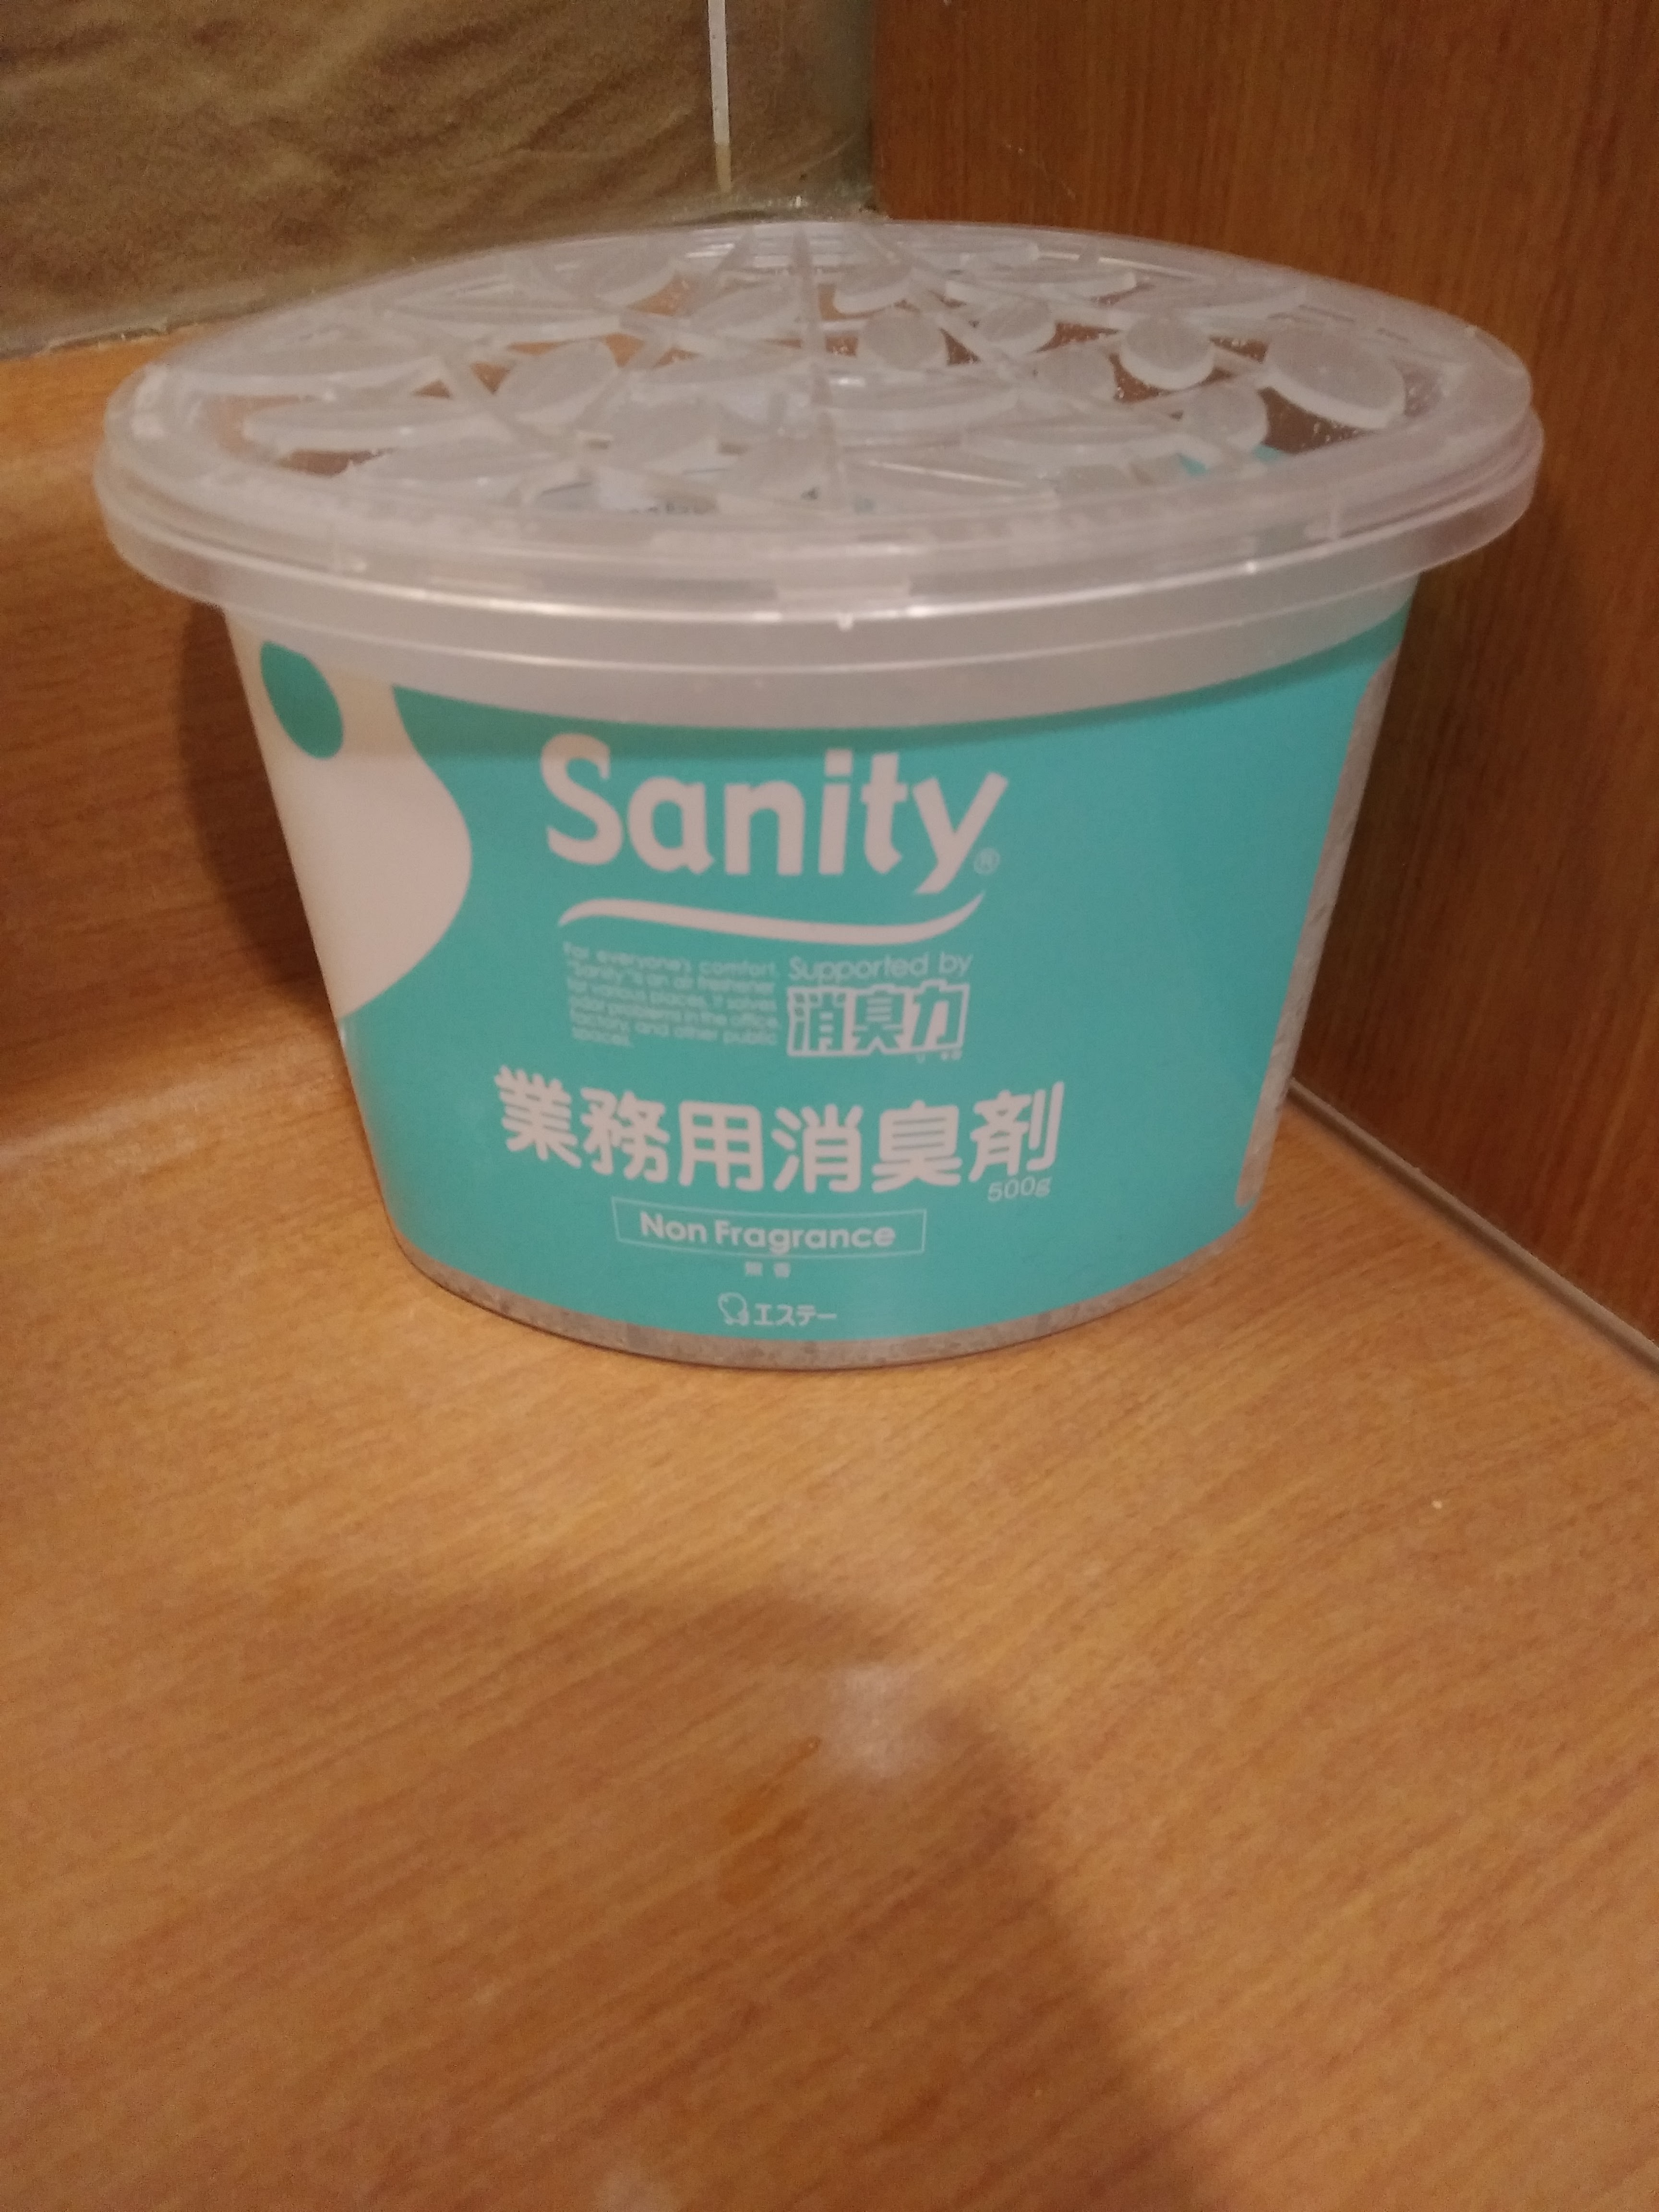 An air freshener called Sanity 